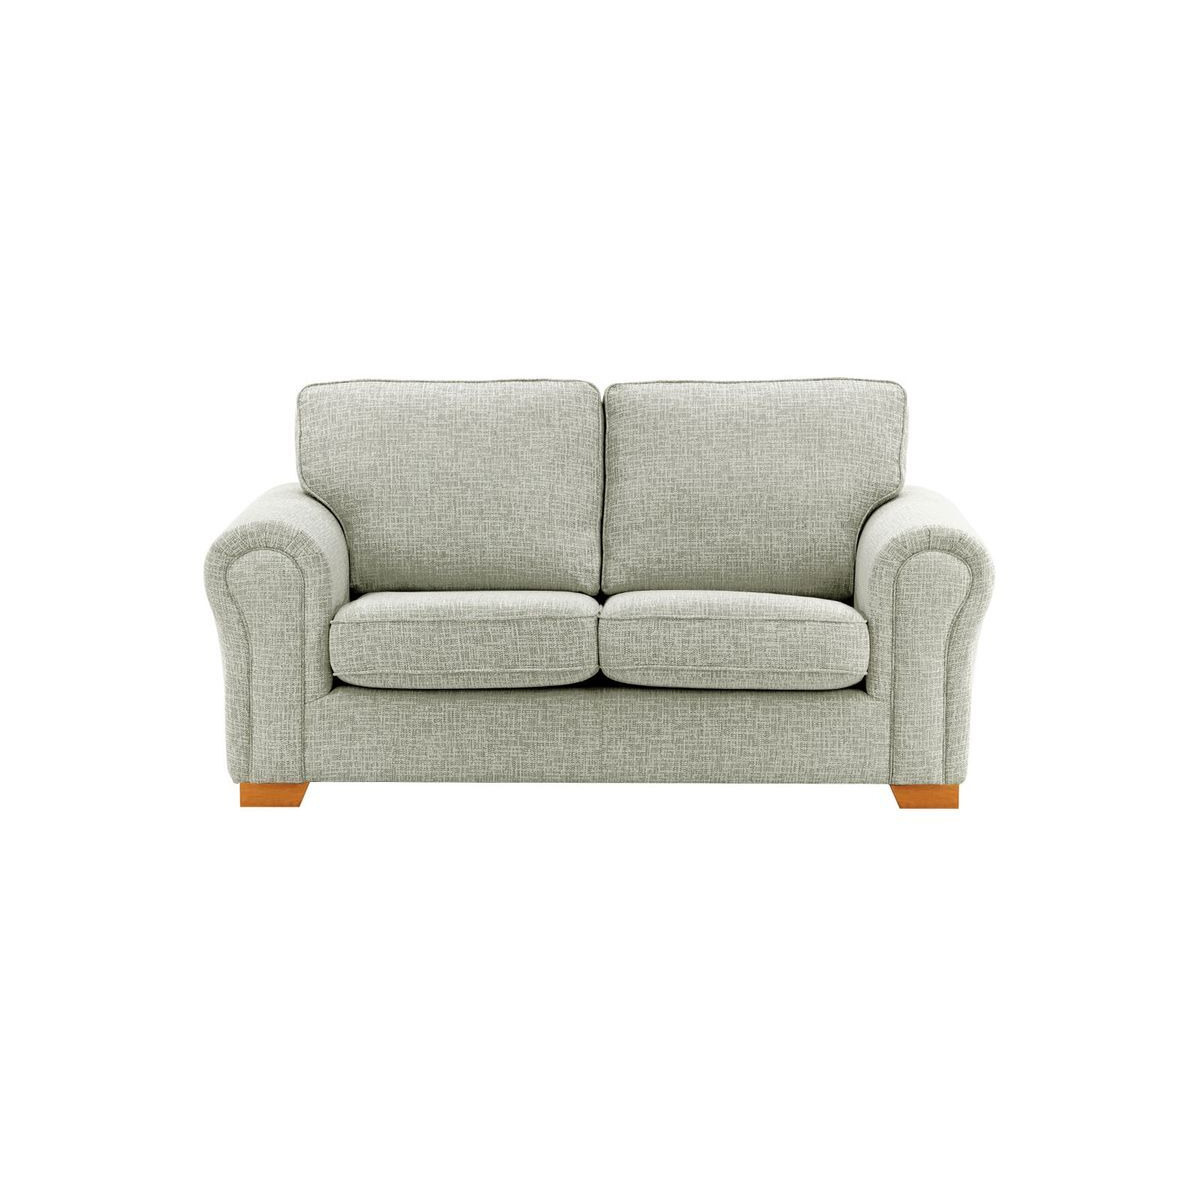 Bonna 2 Seater Sofa, grey, Leg colour: aveo - image 1